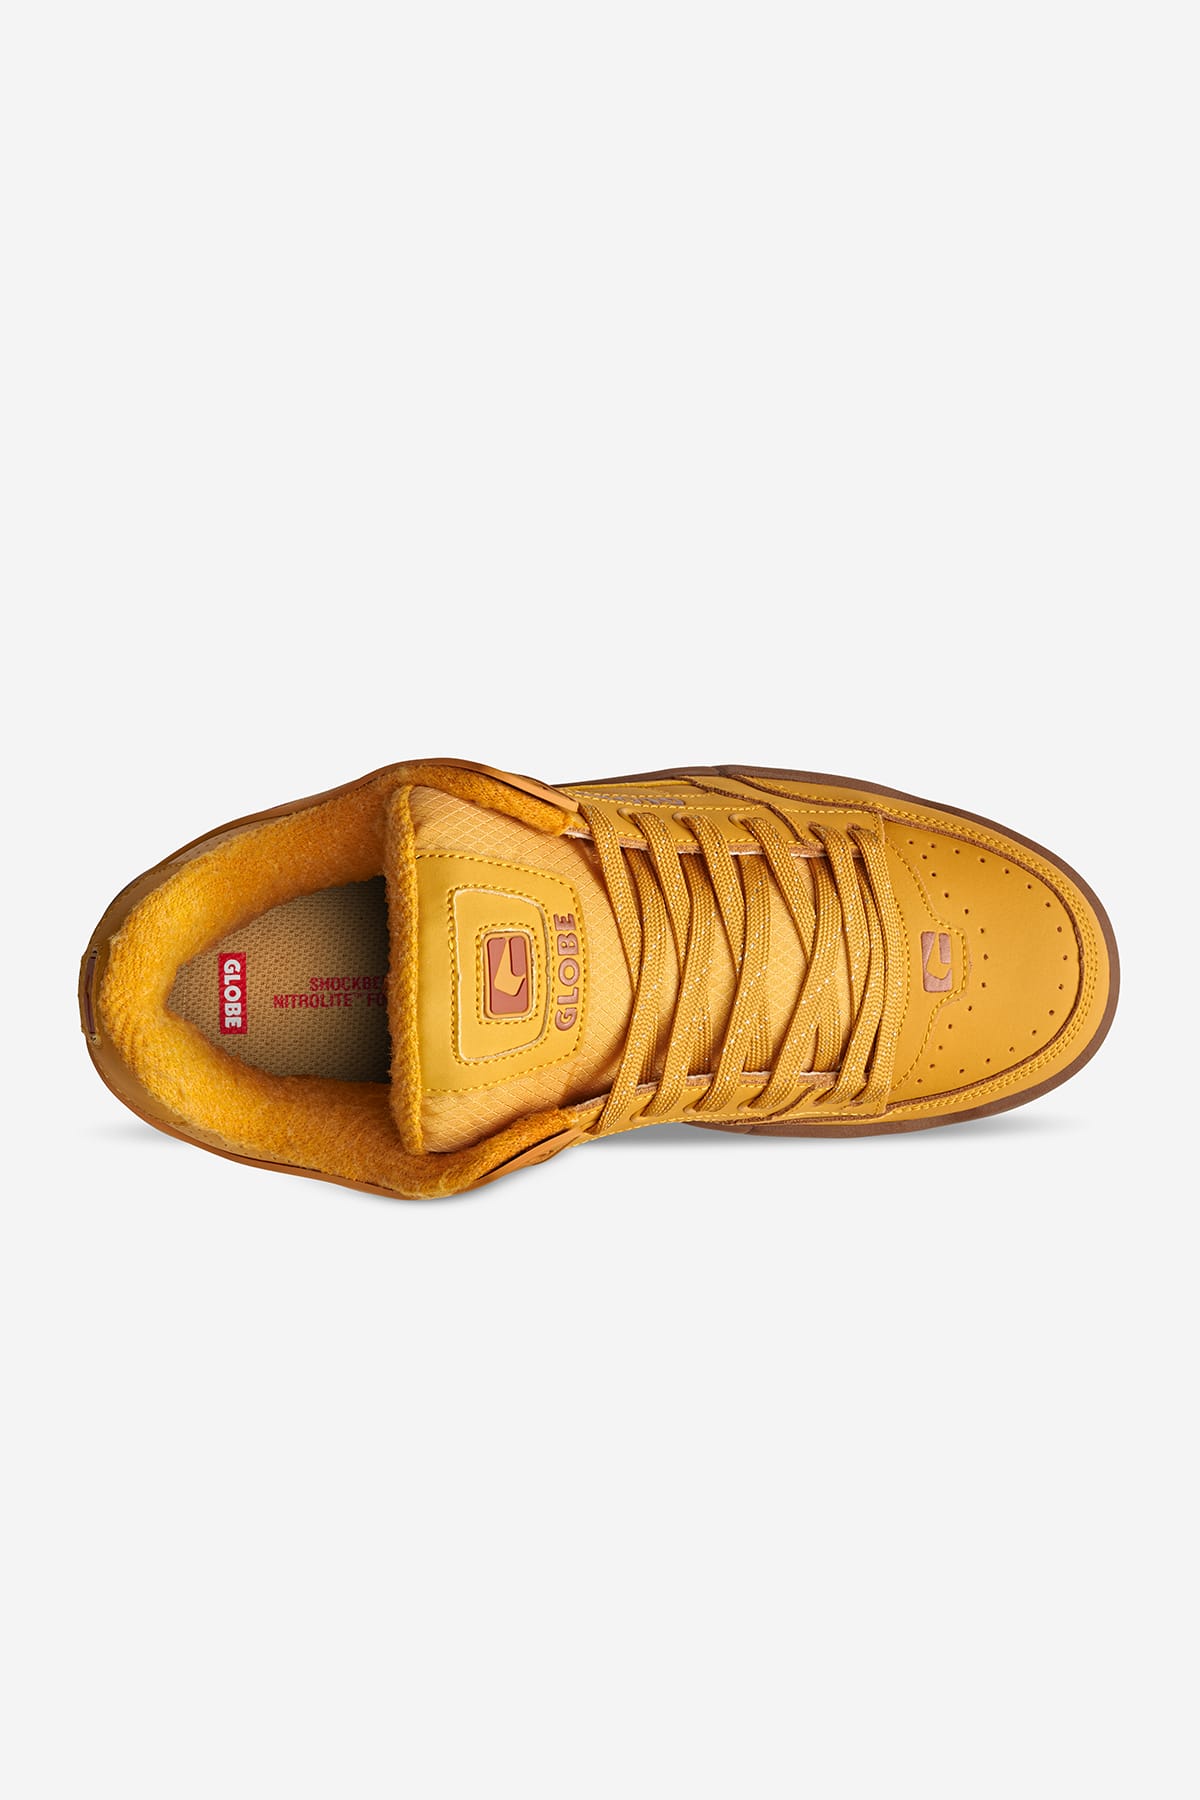 tilt wheat gum bronze skate shoes